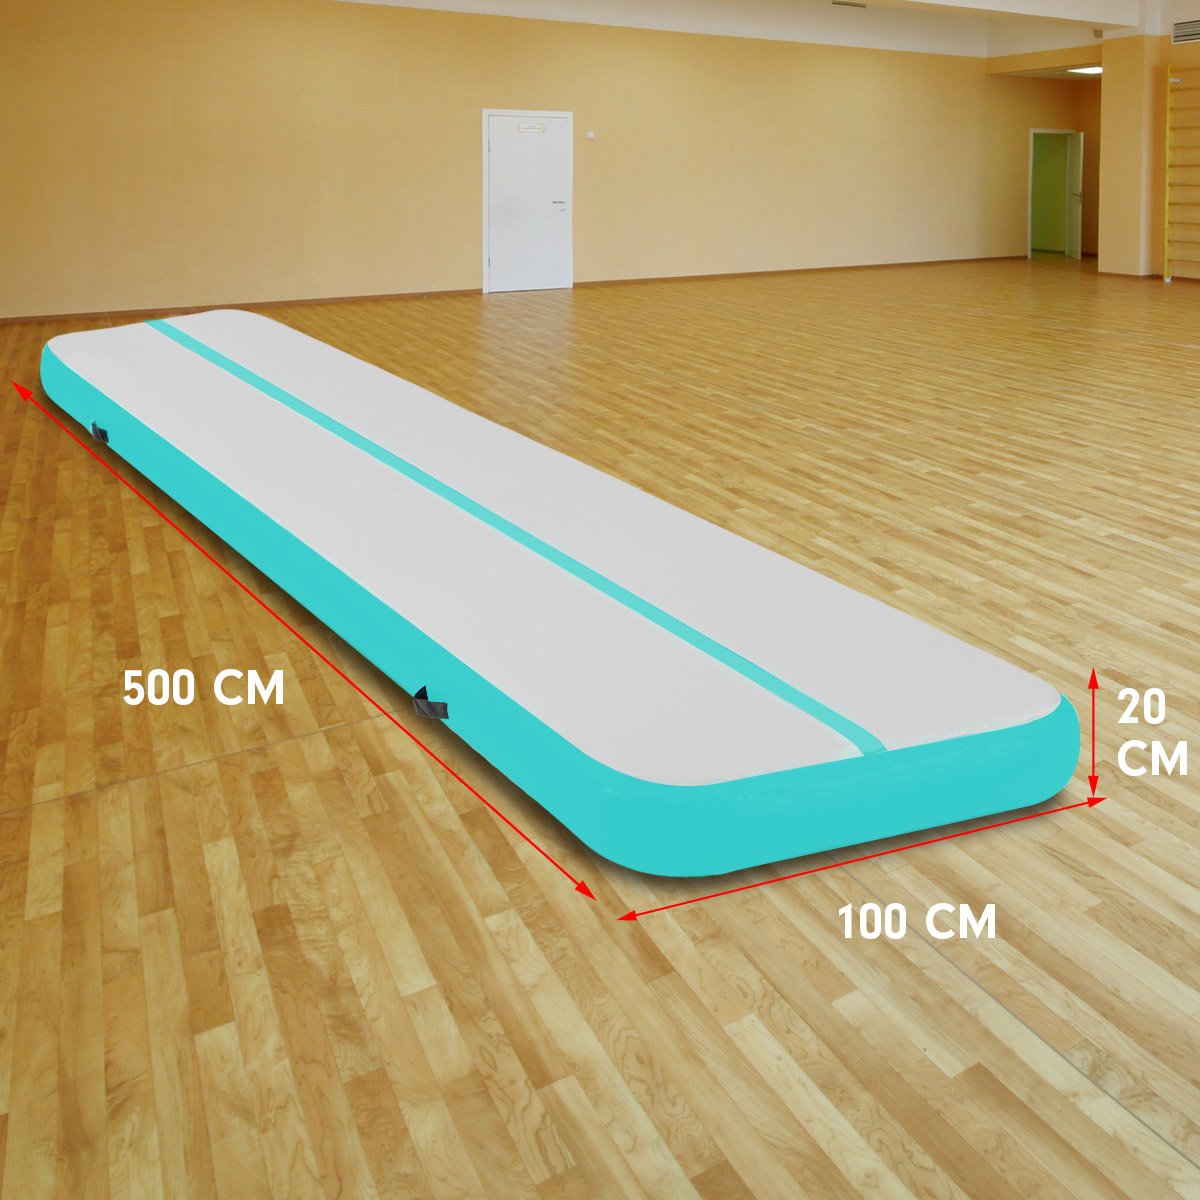 5m x 1m Air Track Inflatable Gymnastics Tumbling Mat - Green